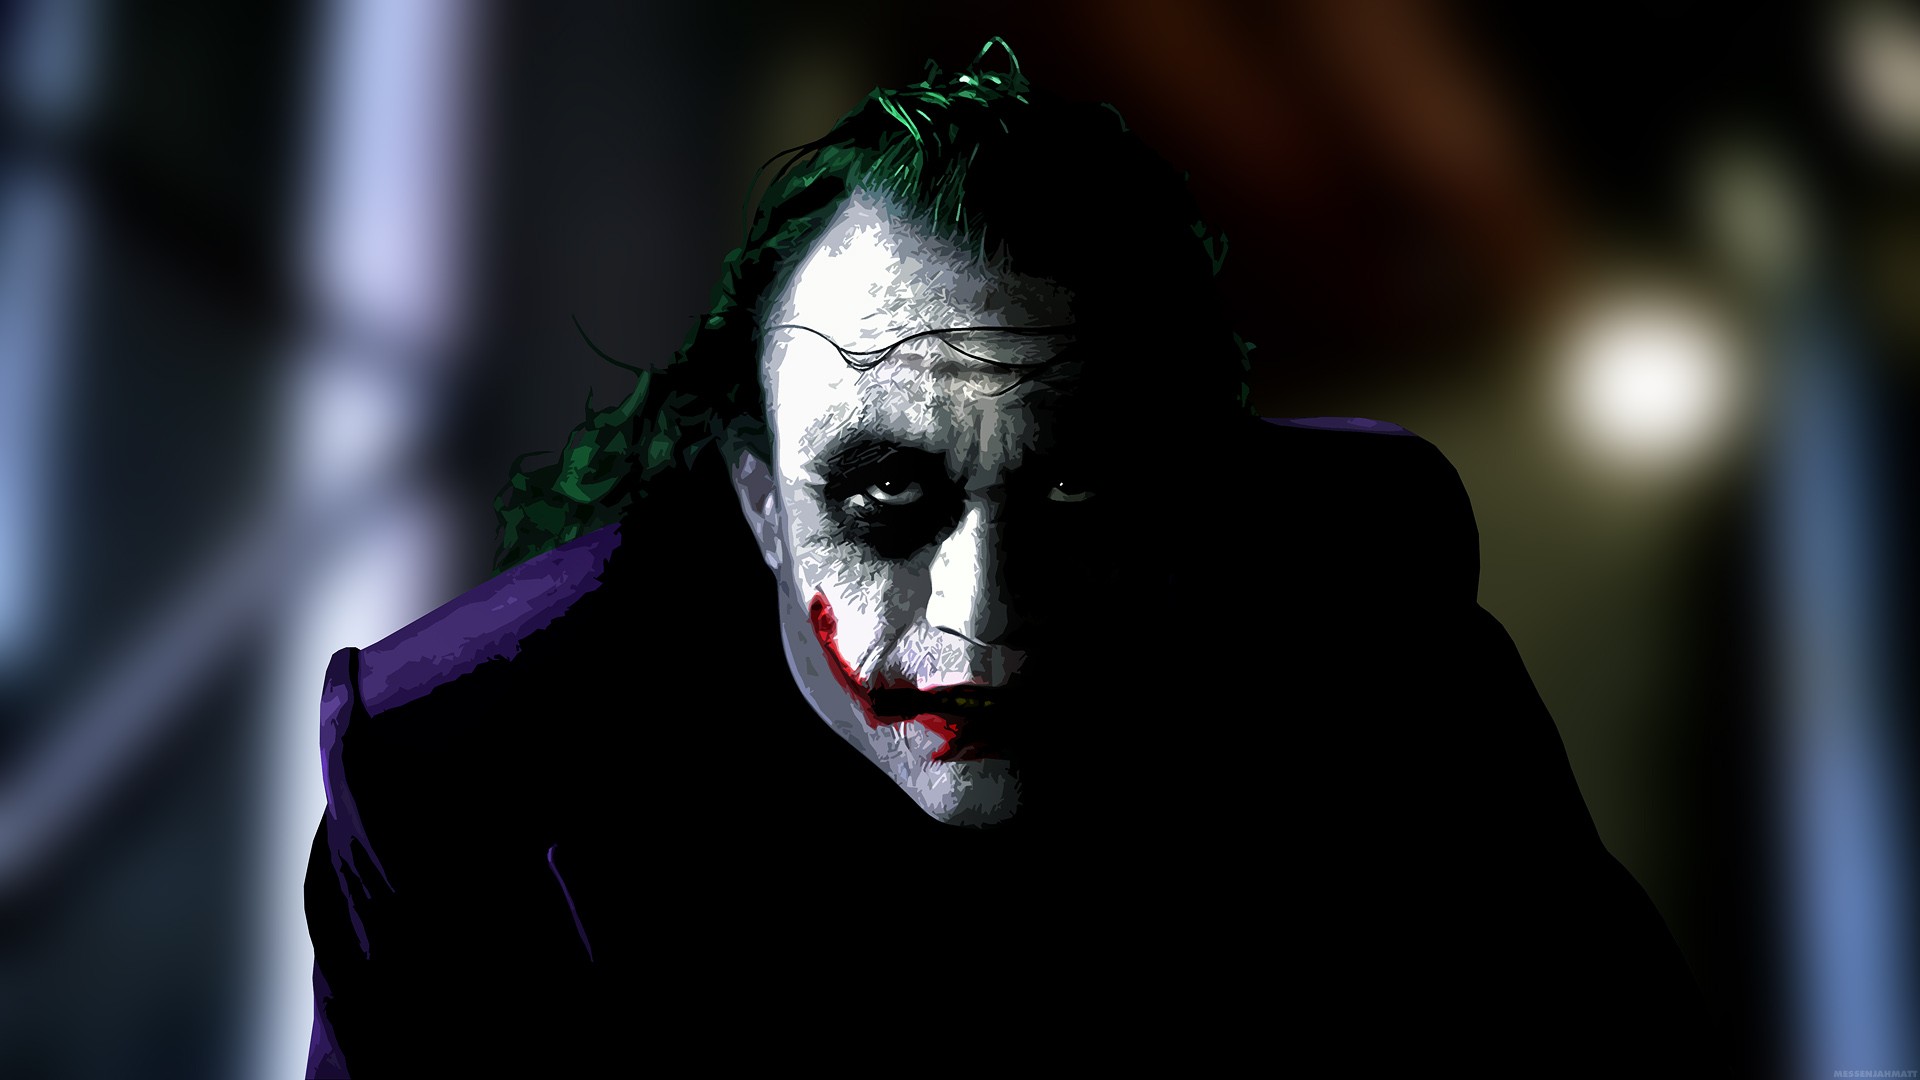 General 1920x1080 movies Batman anime Joker MessenjahMatt The Dark Knight villains face green hair Heath Ledger